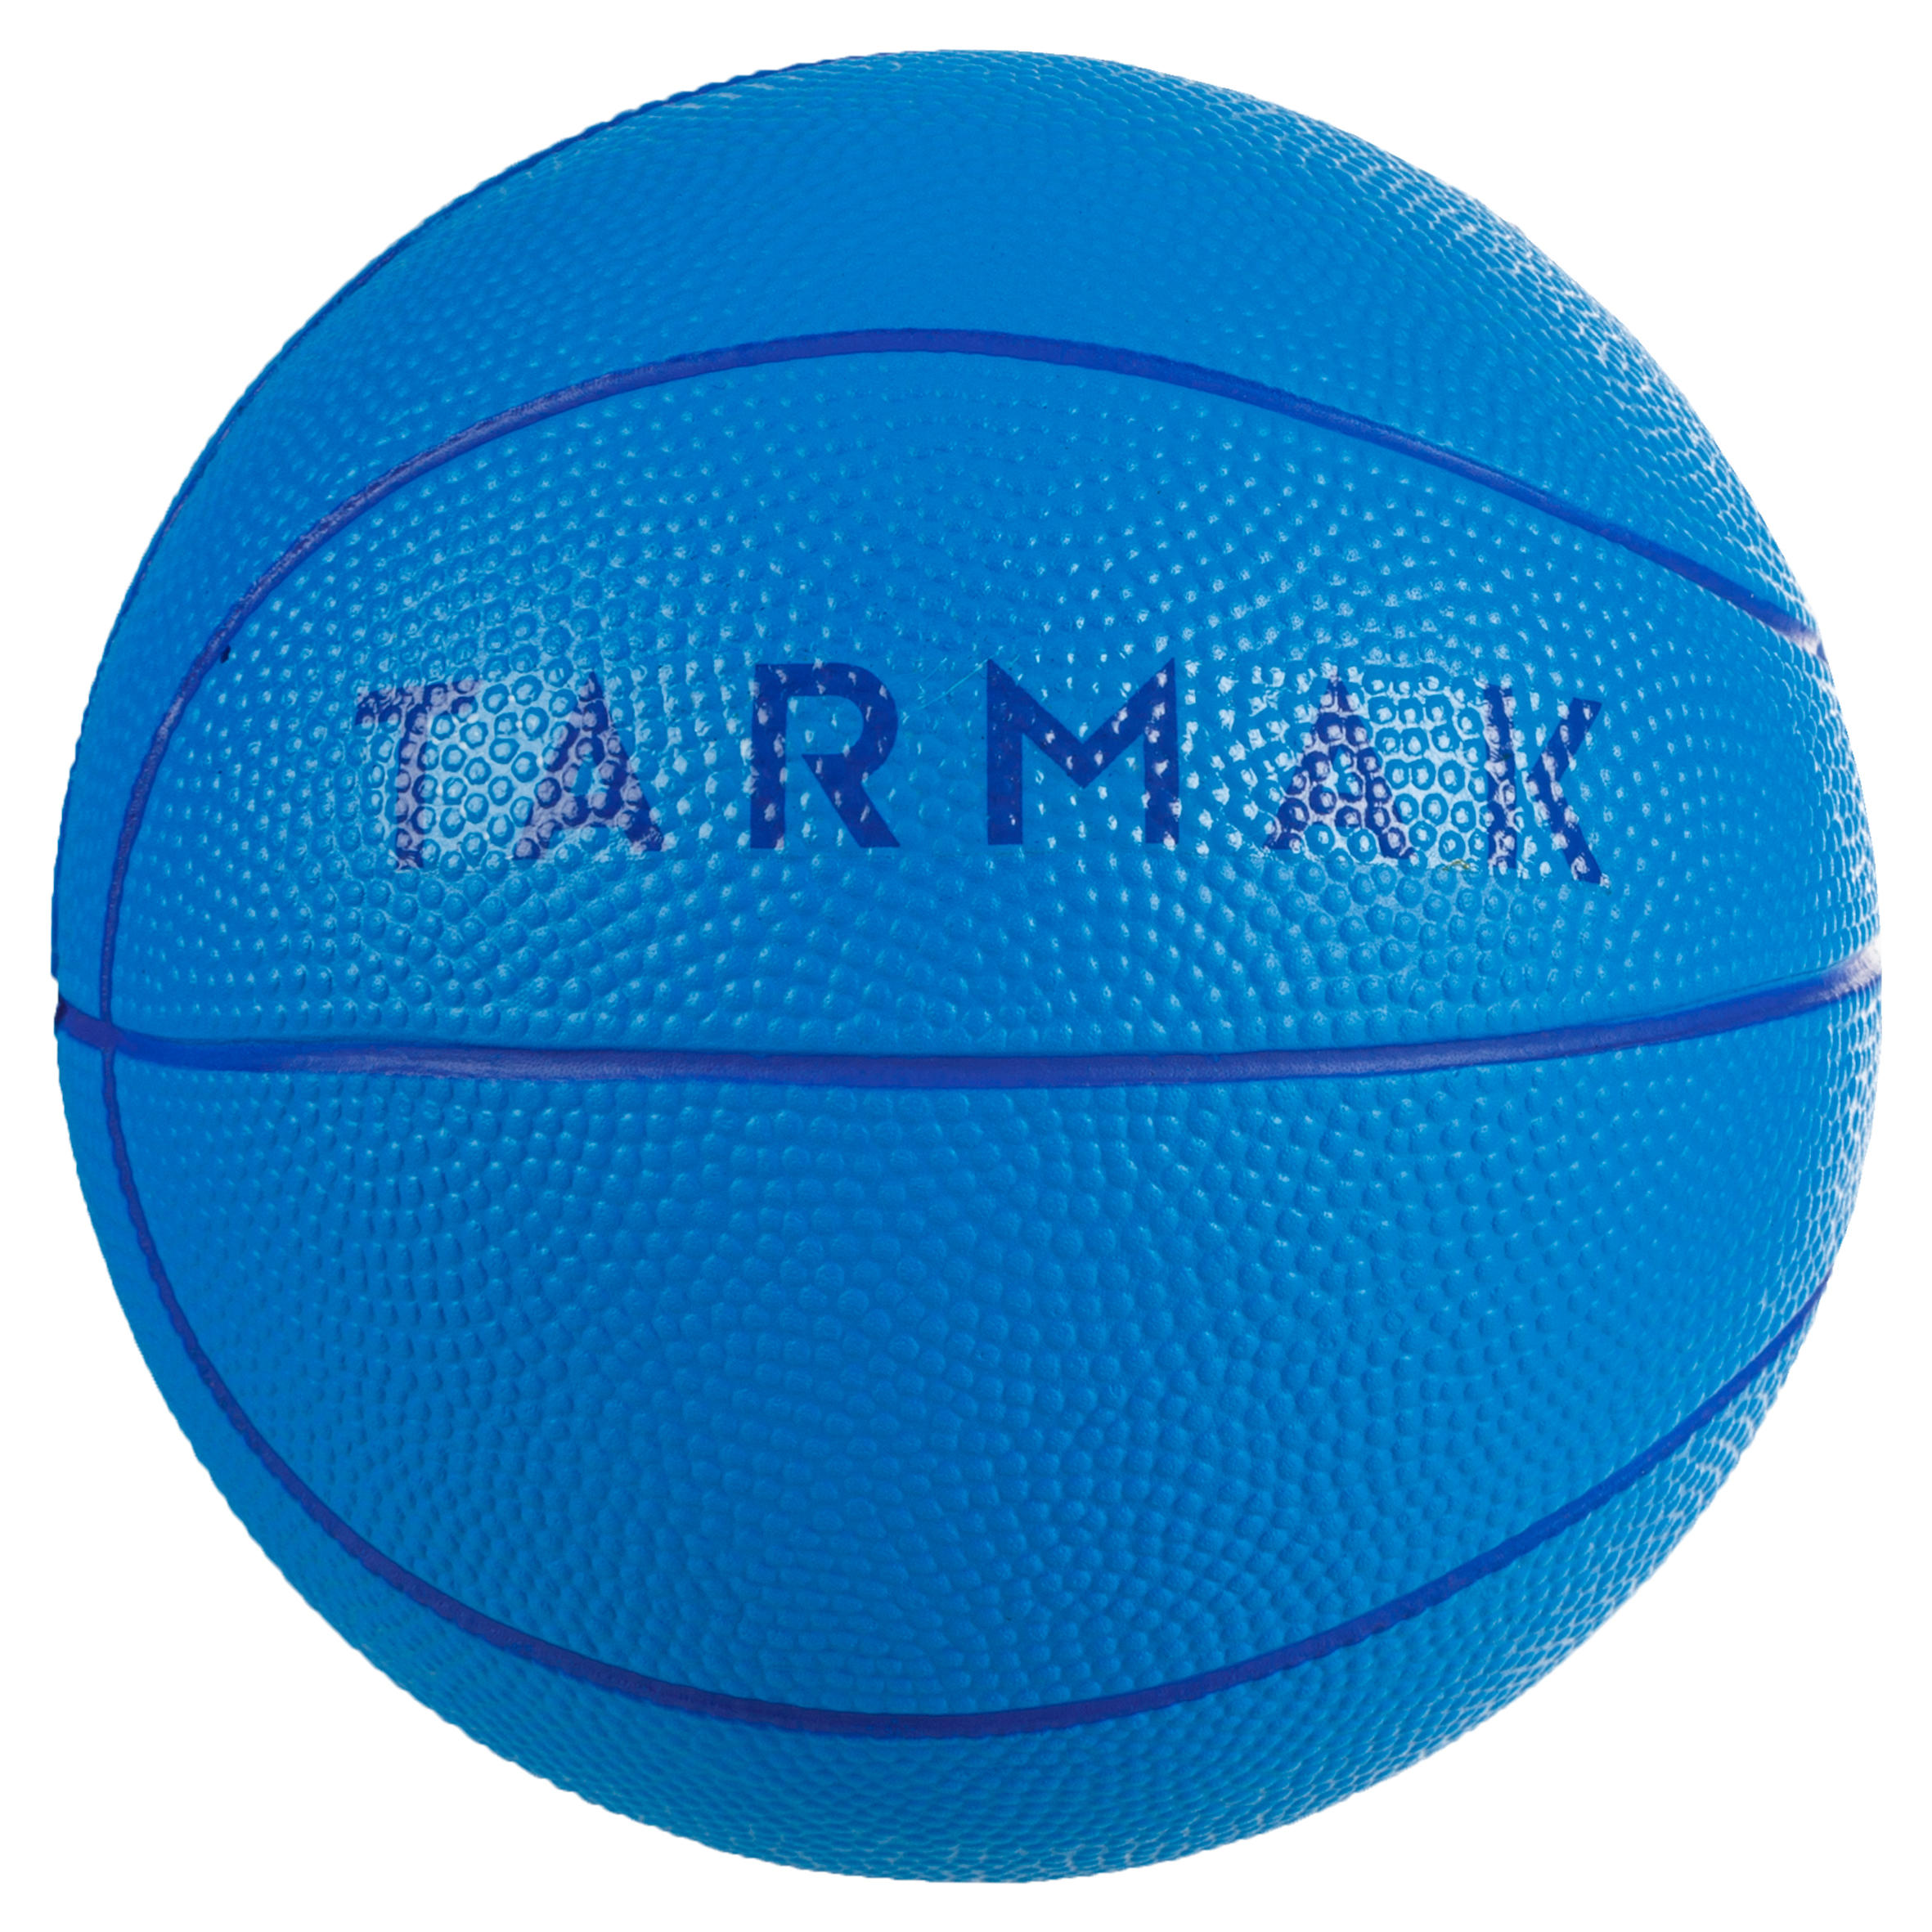 TARMAK K100 - BlueKids' Mini Foam Basketball Size 1 (Up to 4 Years)